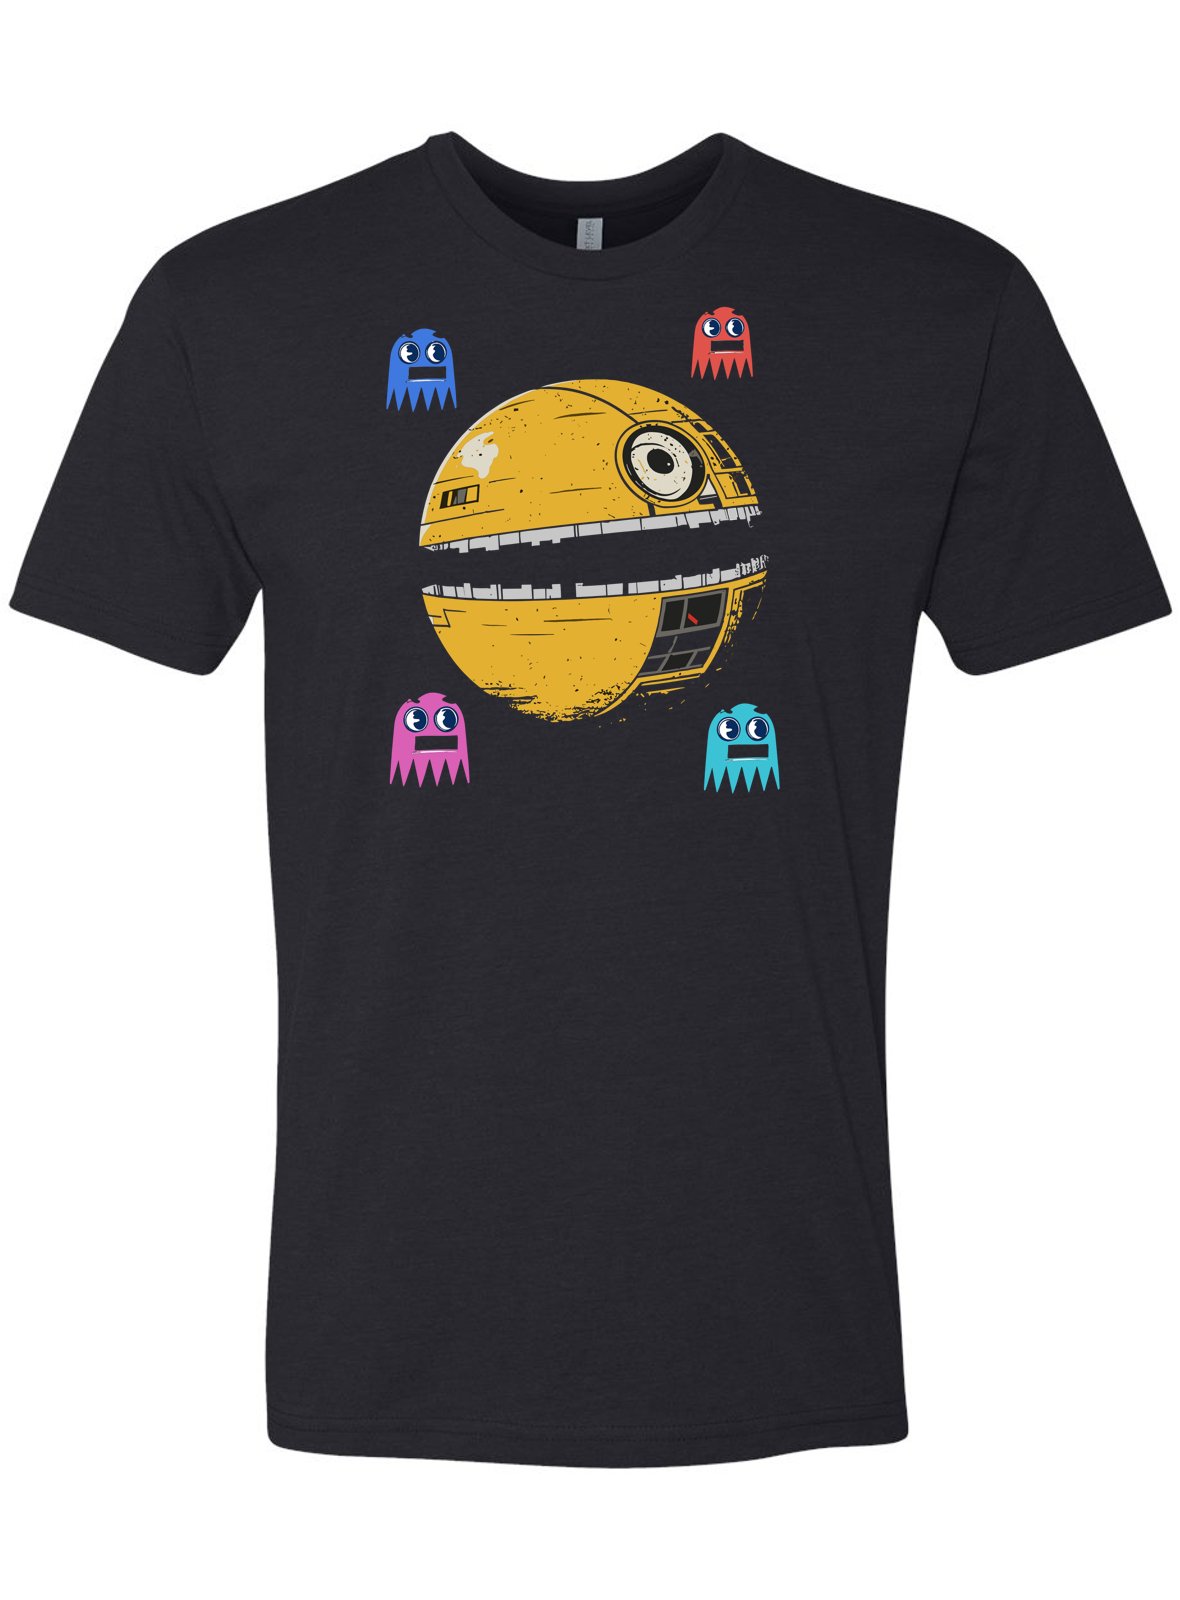 Exclusive Pacman Death Star T-Shirt! -